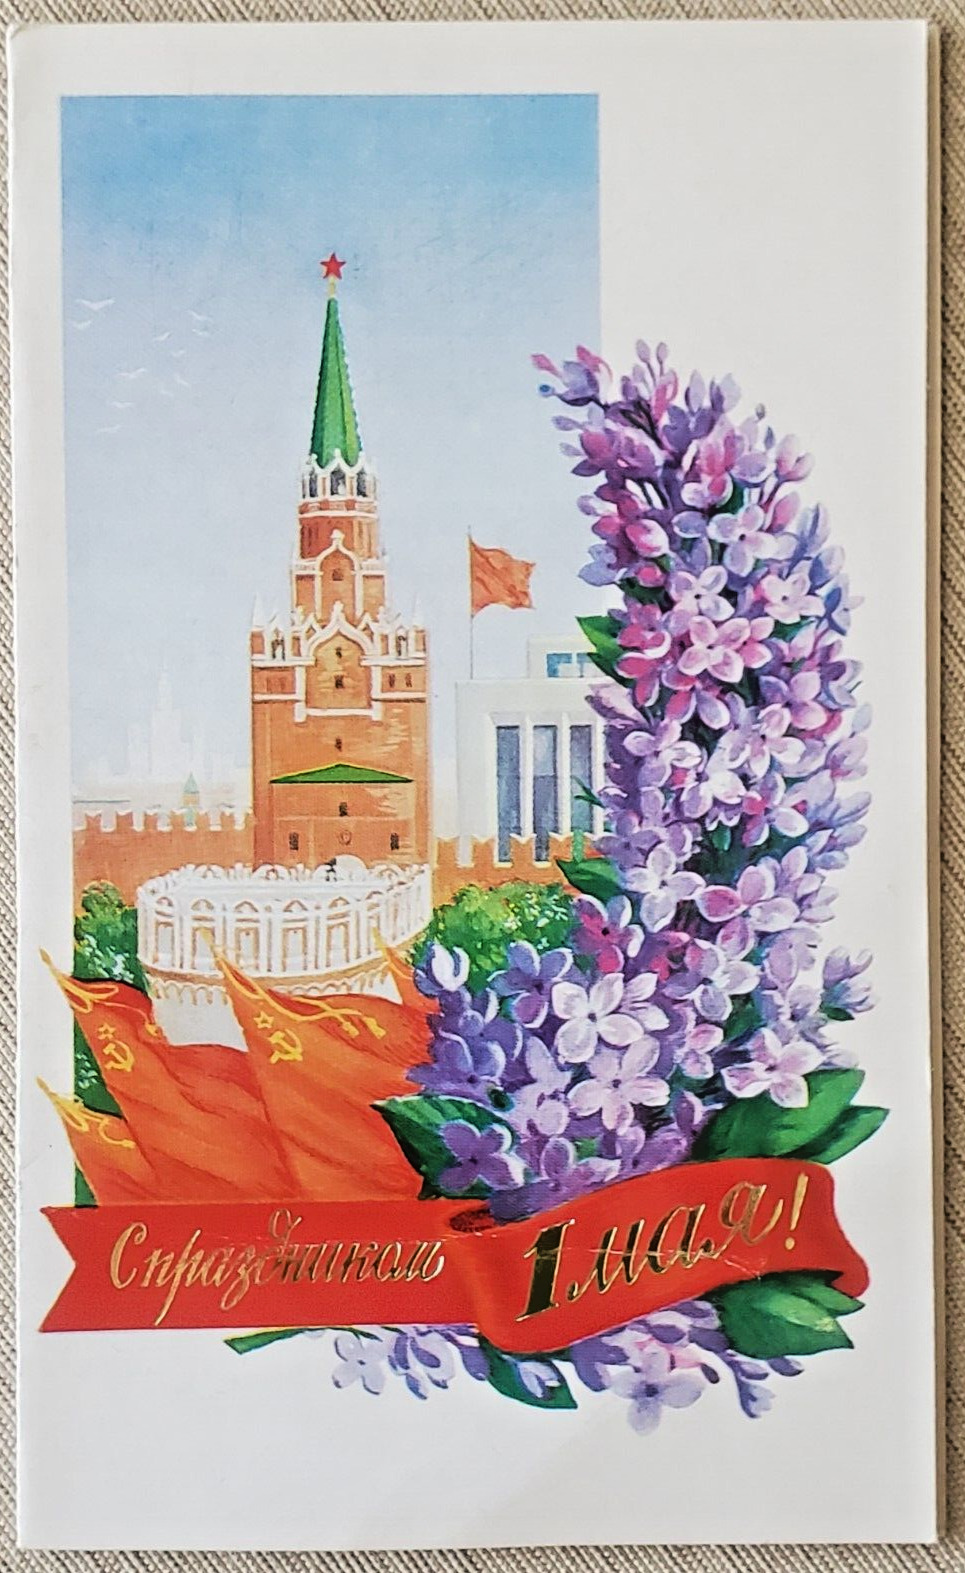 VTG USSR May 1 Greeting Card w Kremlin ~ 1 Мая Открытка 1983 Правда ~ Unused